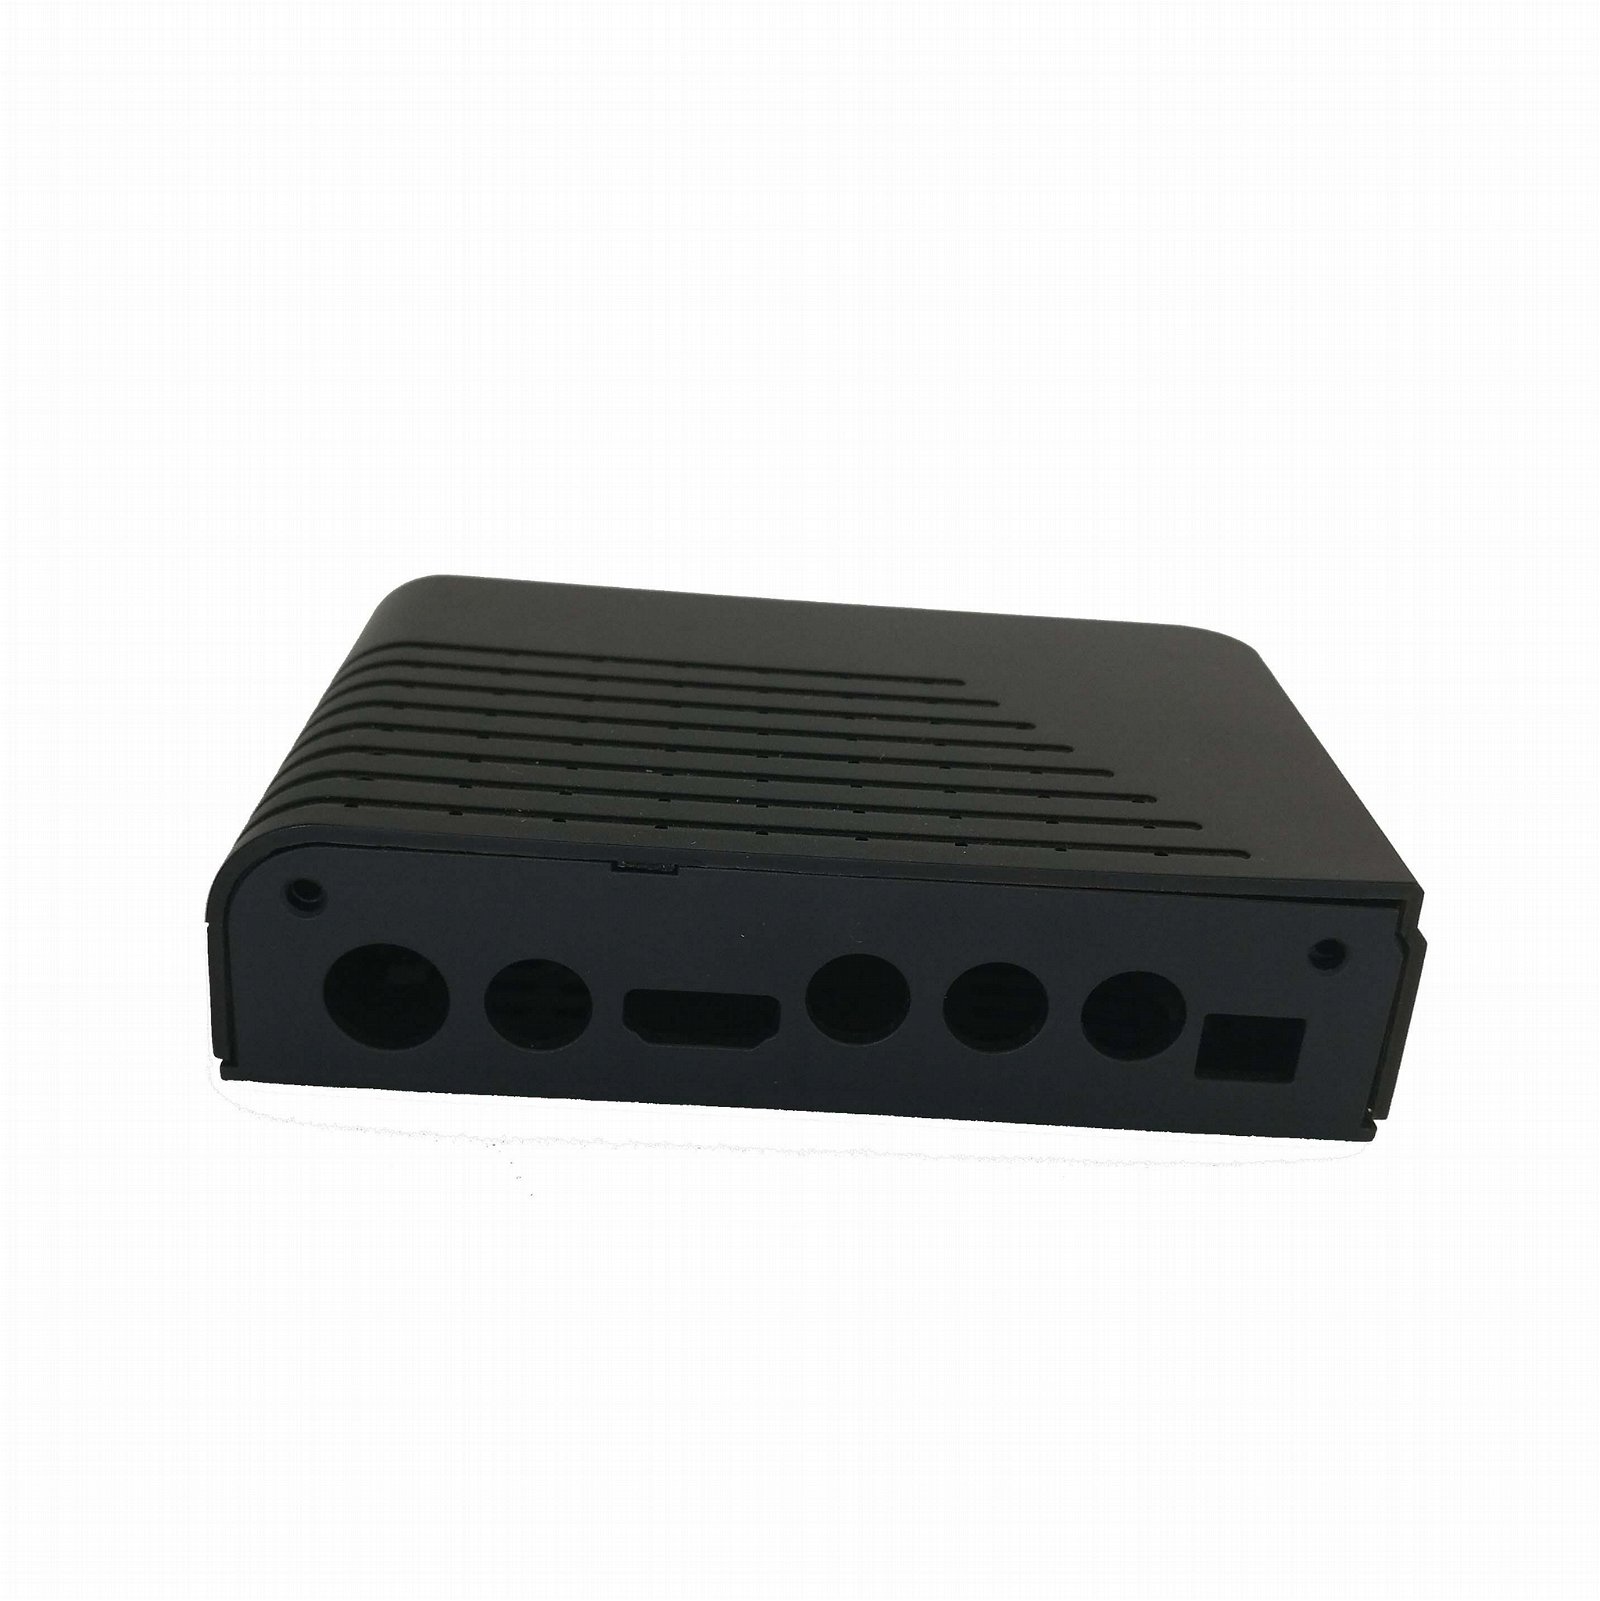 DVB-T2 +Cable tv box Combo tv boxmini size factory support cheap price 5